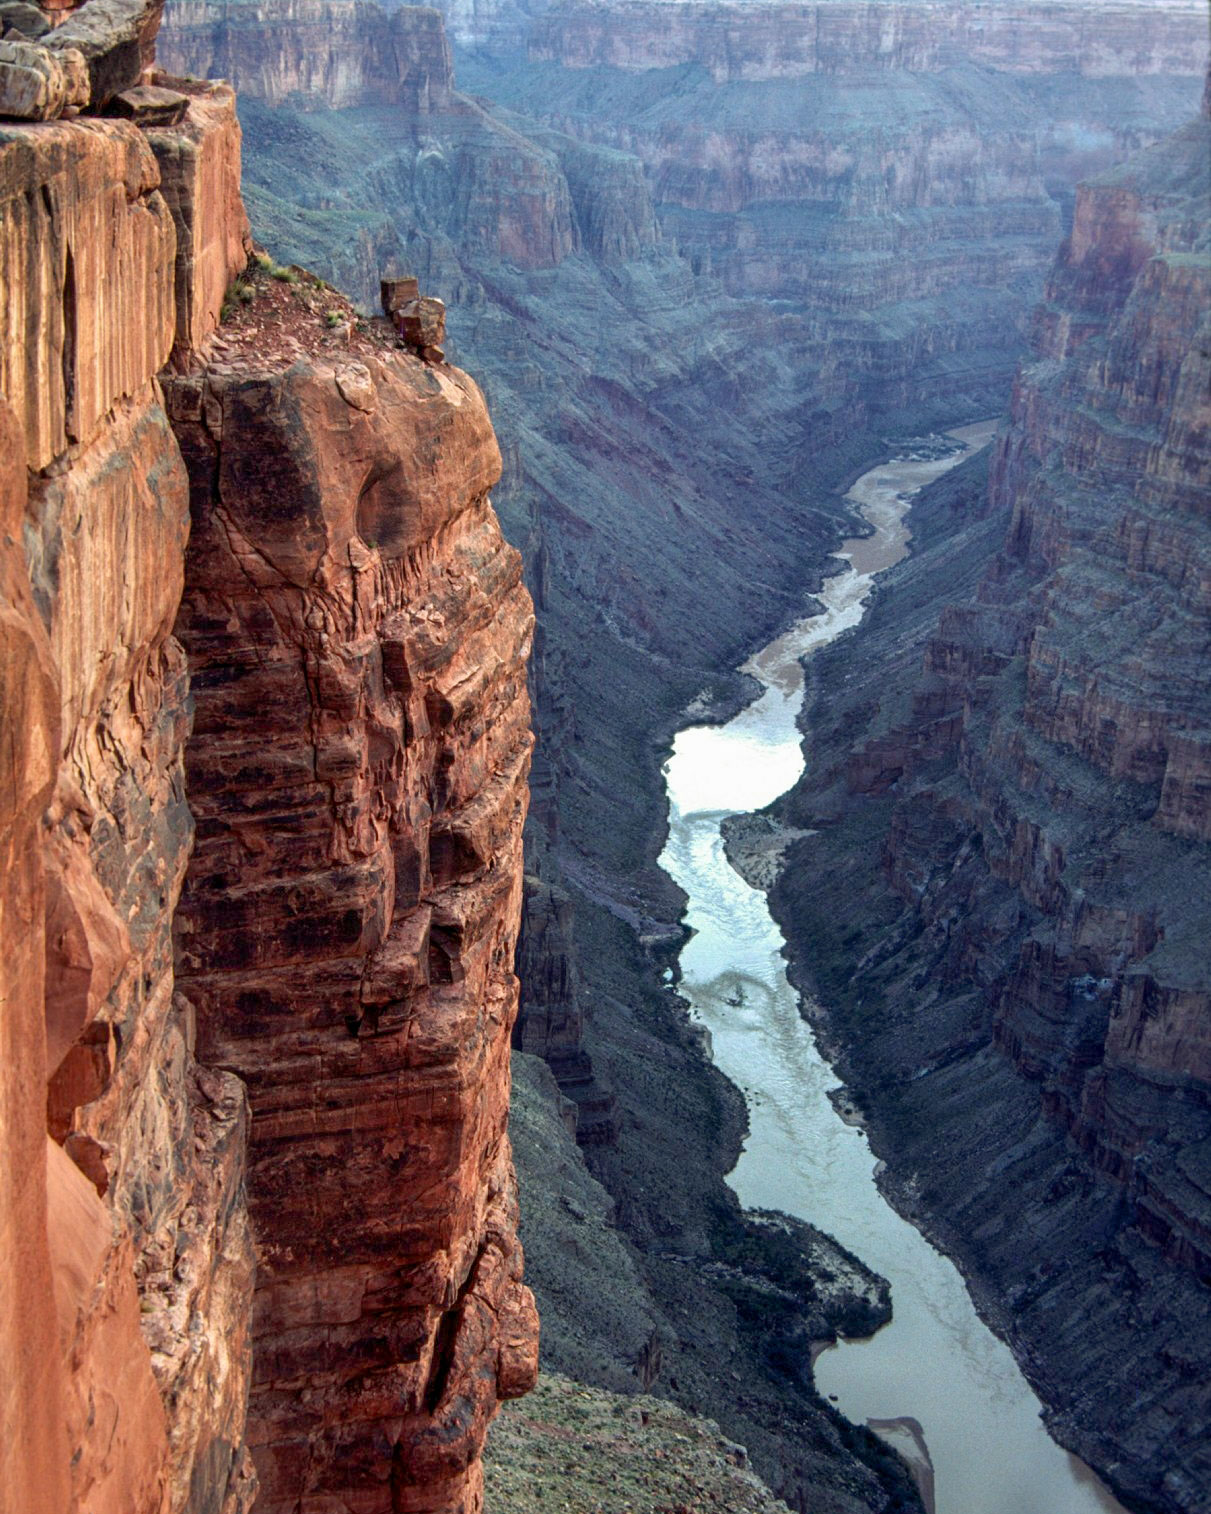 nps-geodiversity-atlas-grand-canyon-national-park-arizona-u-s